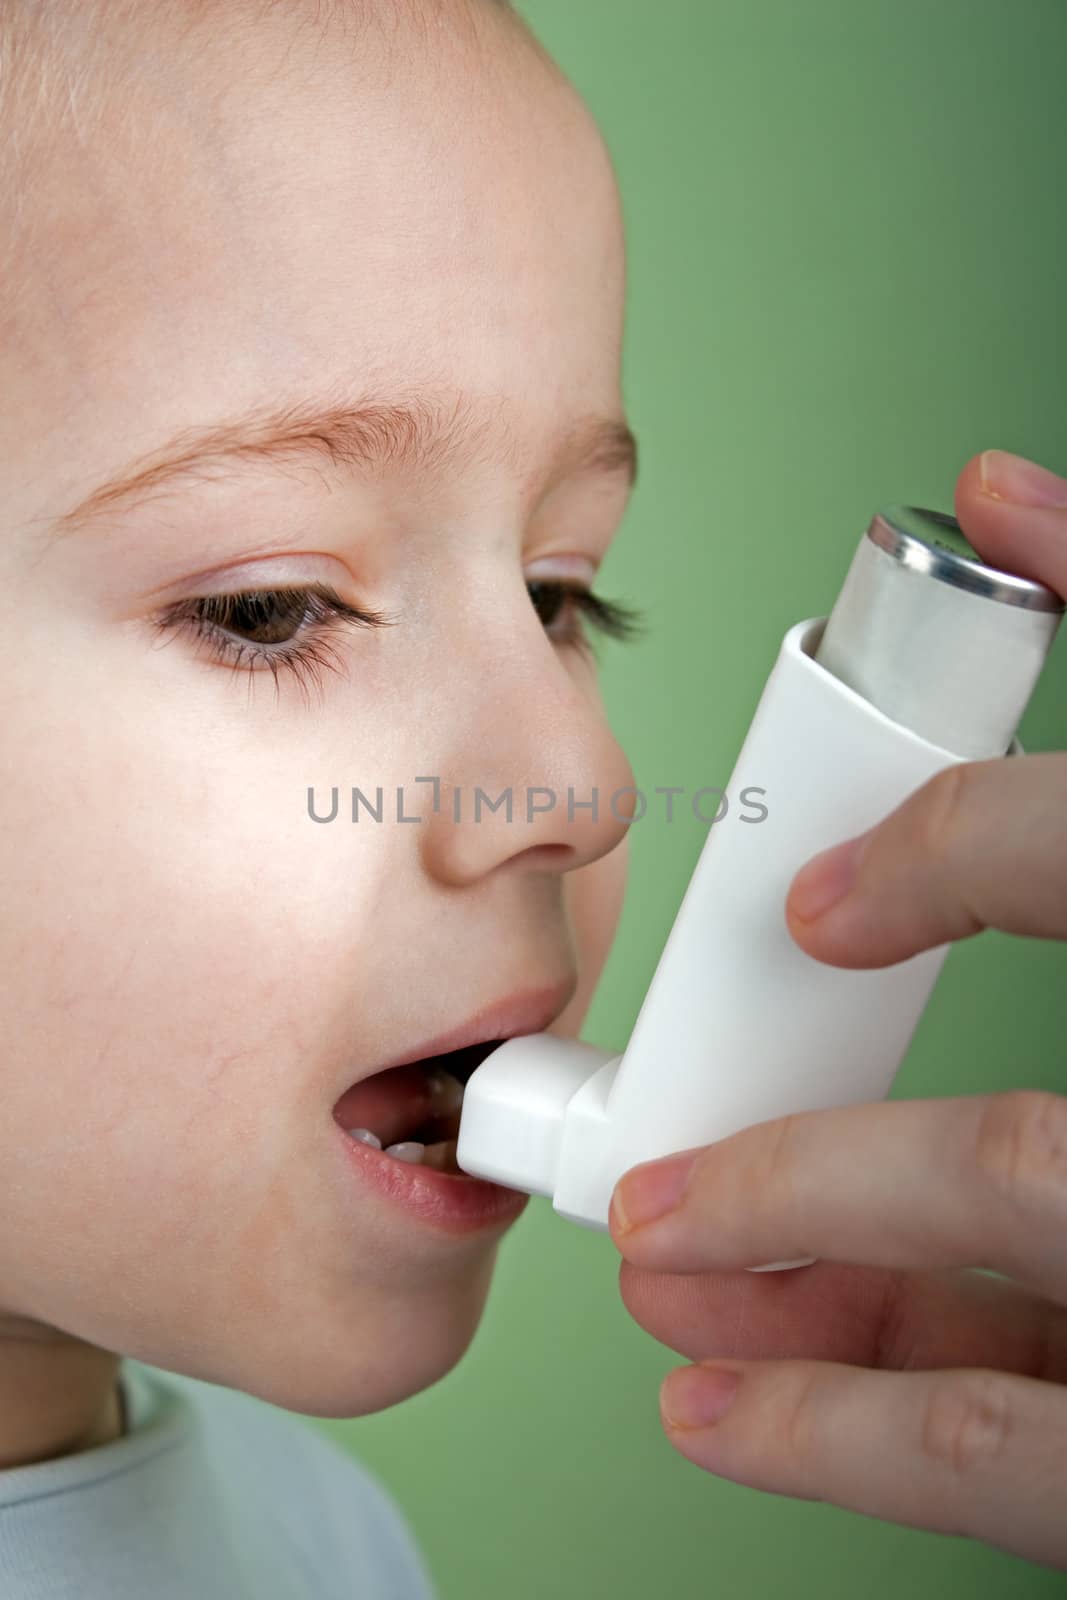 Asthmatic inhaler by ia_64